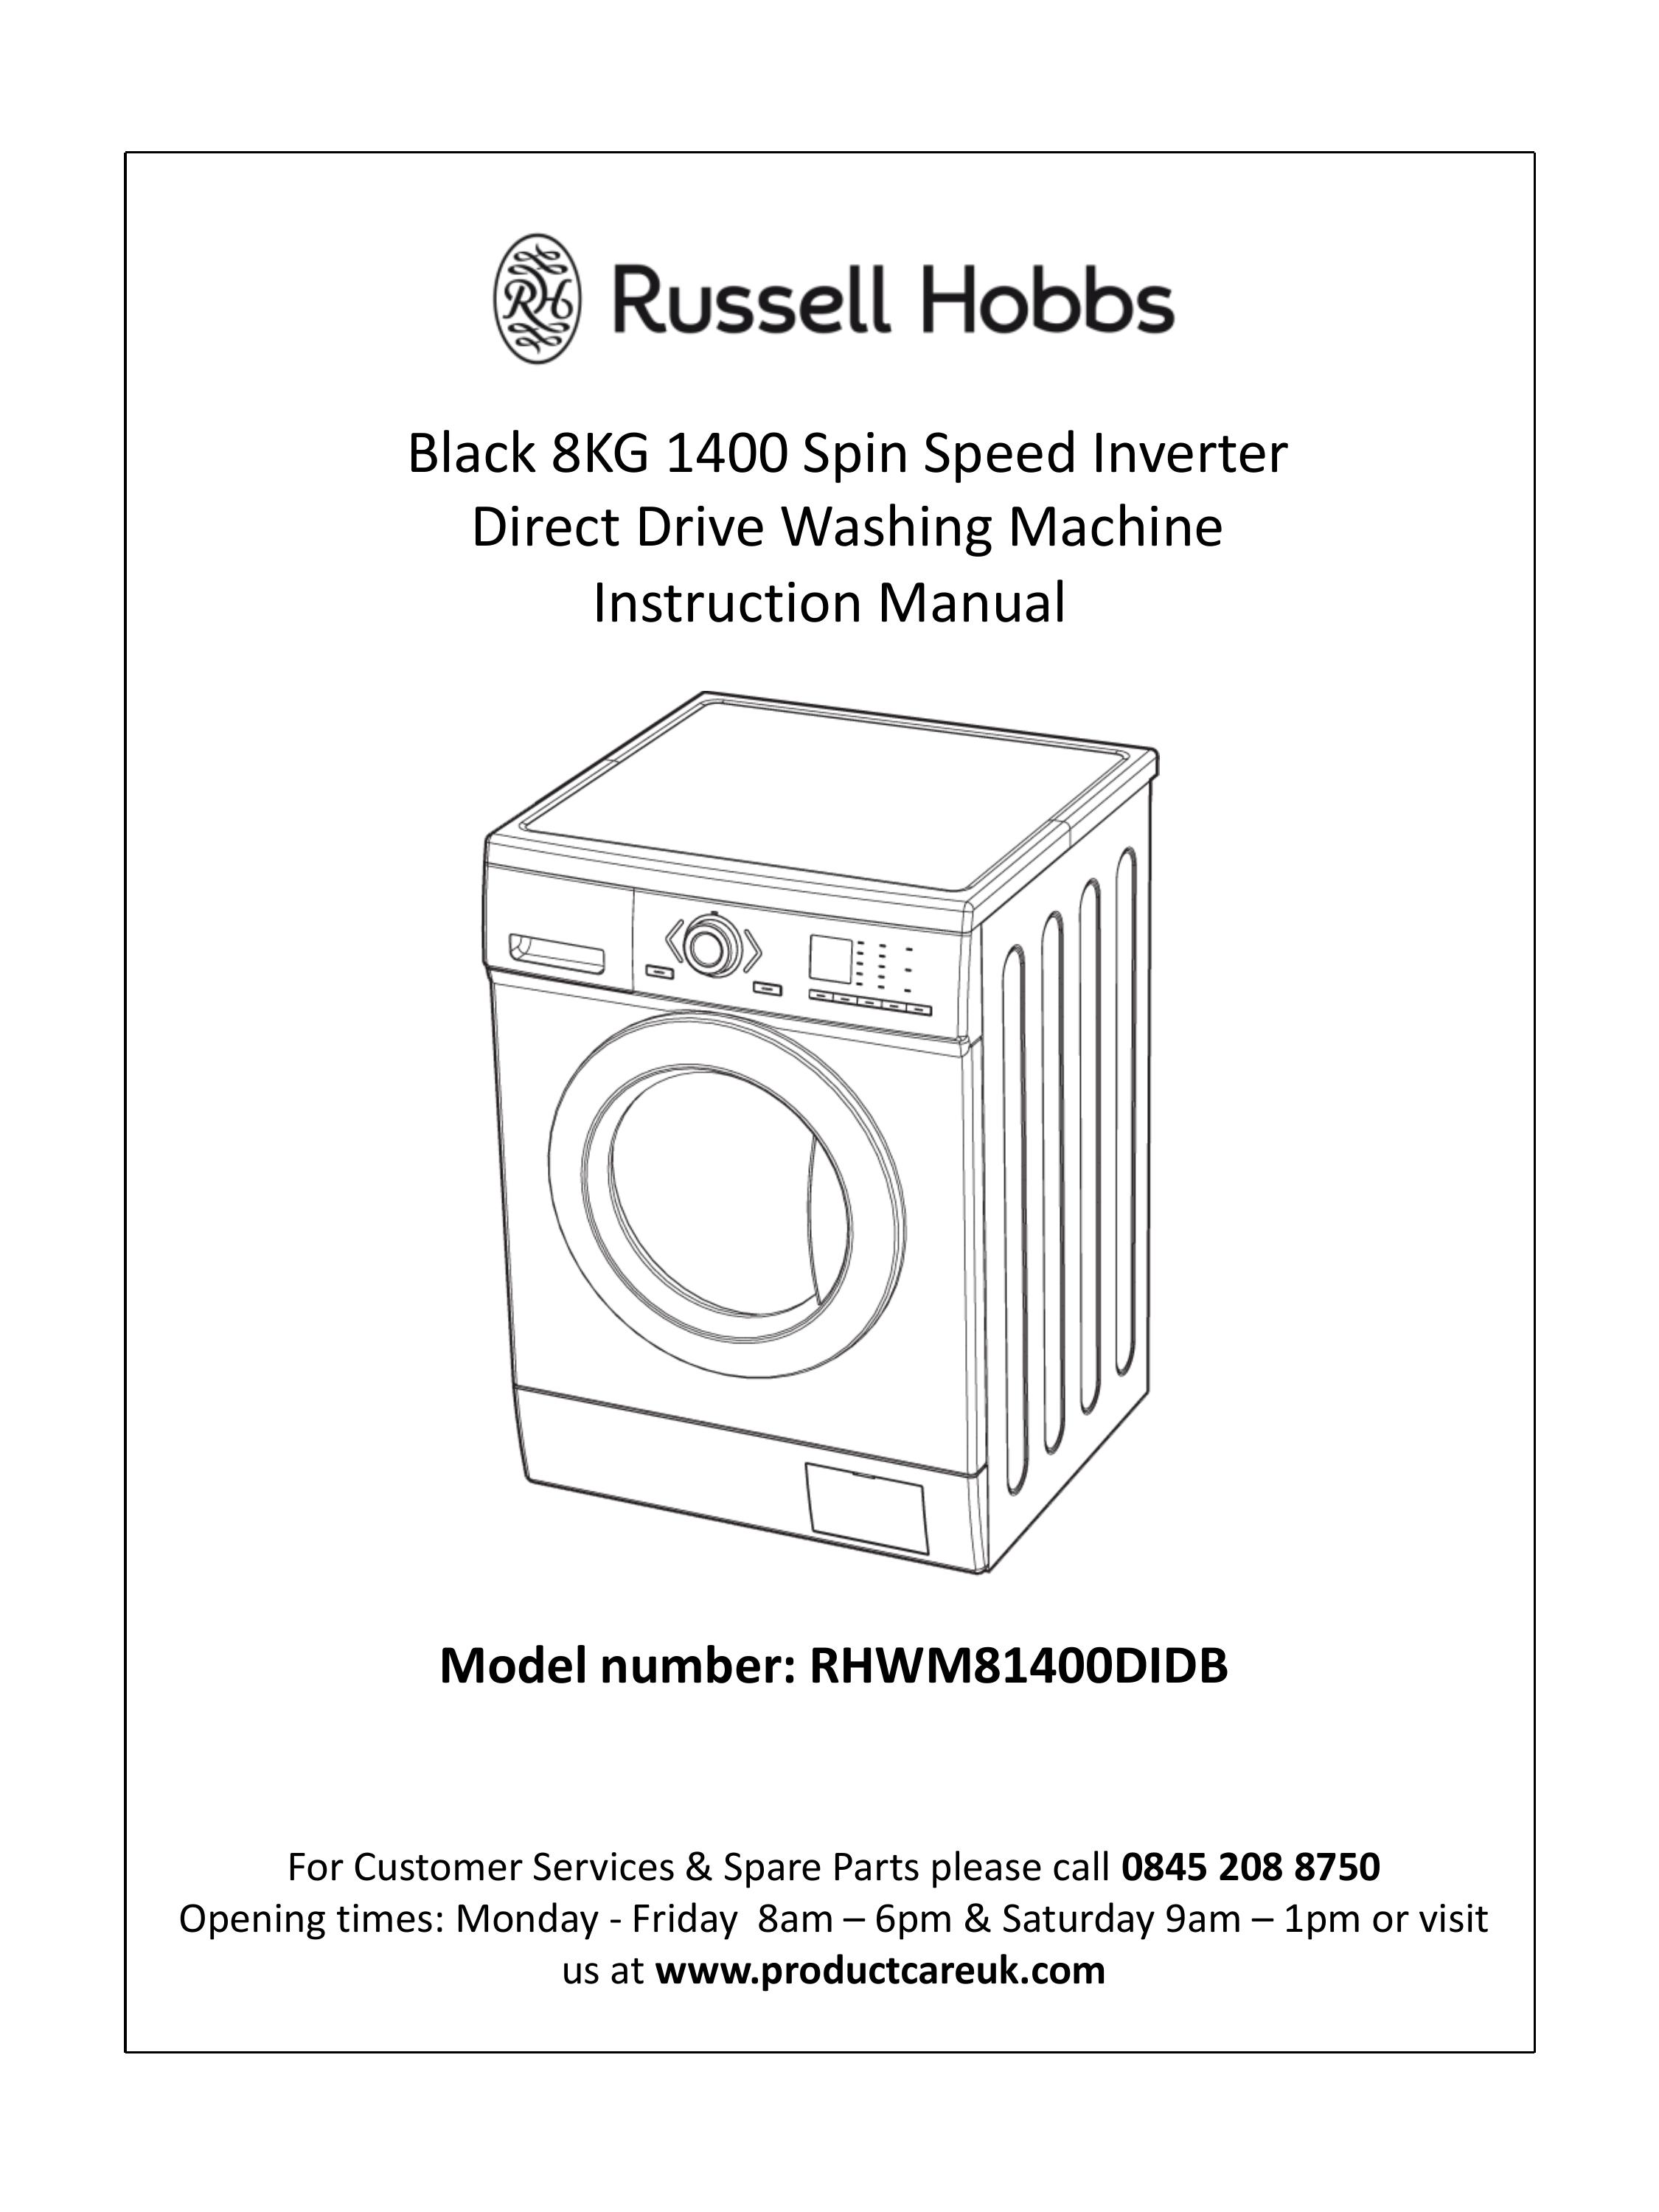 Russell Hobbs RHWM81400DIDB Washer User Manual